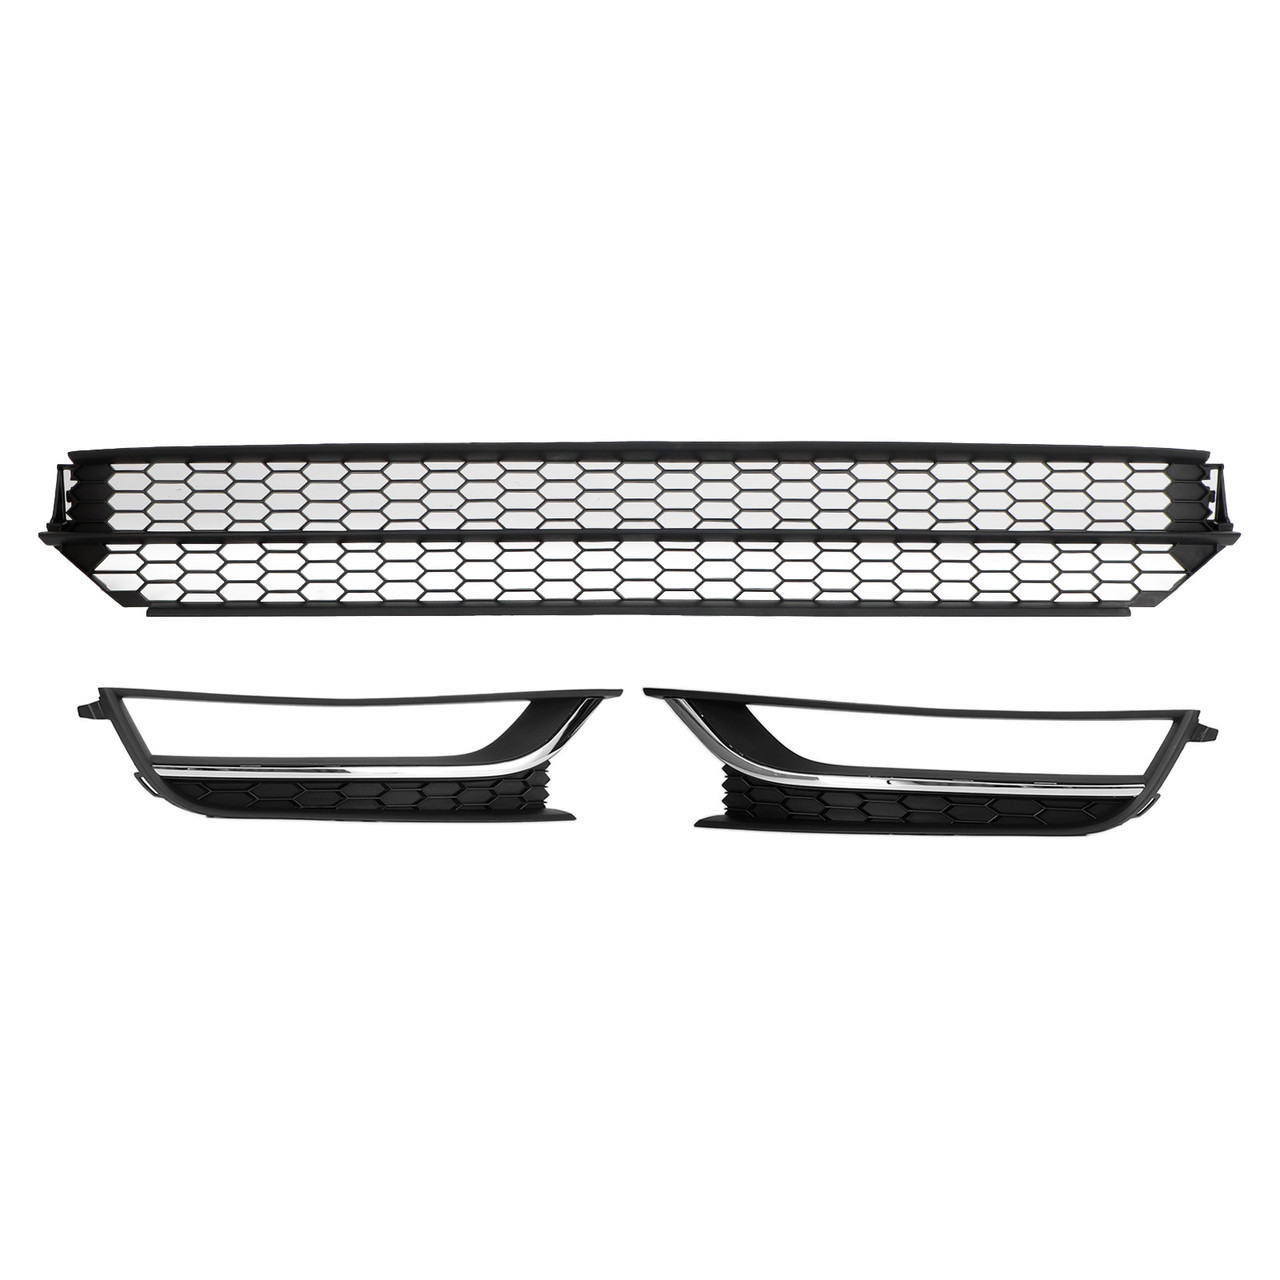  Chrome Front Bumper Lower Grille+Fog Light Cover Fit For  Compatible with VW Passat B7 2012 2013 2014 2015 USA Version : Automotive